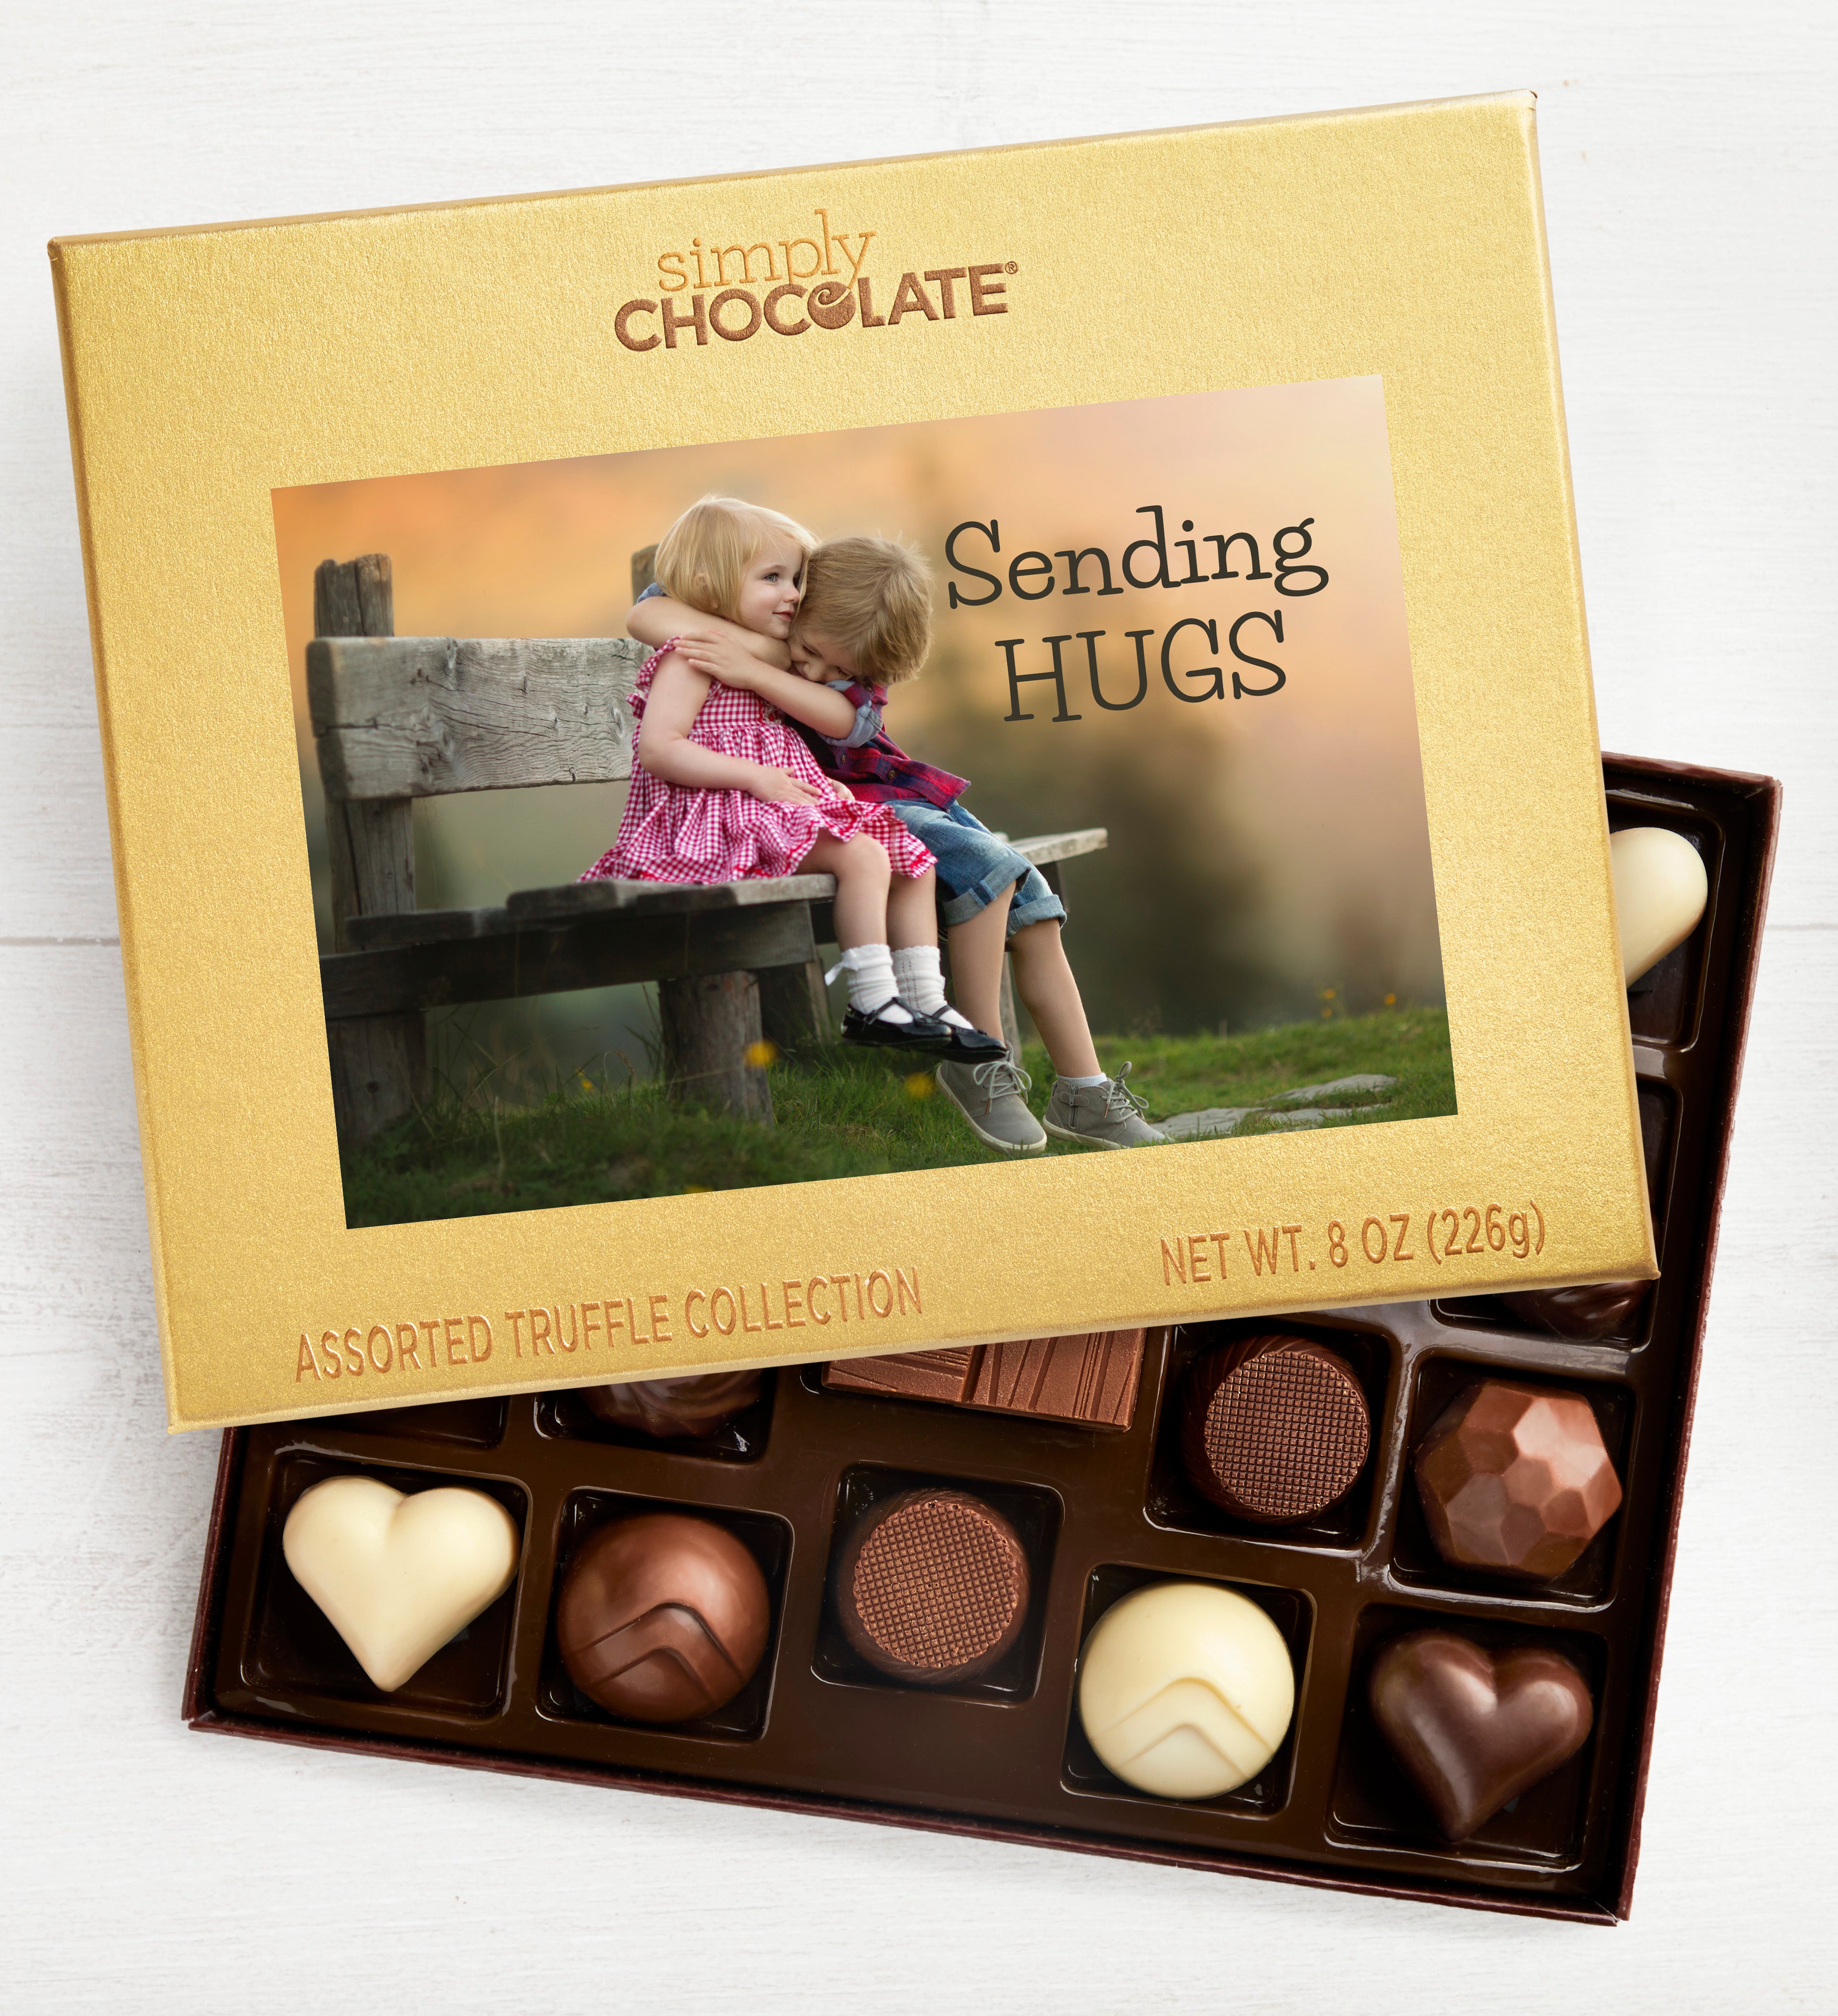 Sending Hugs 17pc Chocolate Box